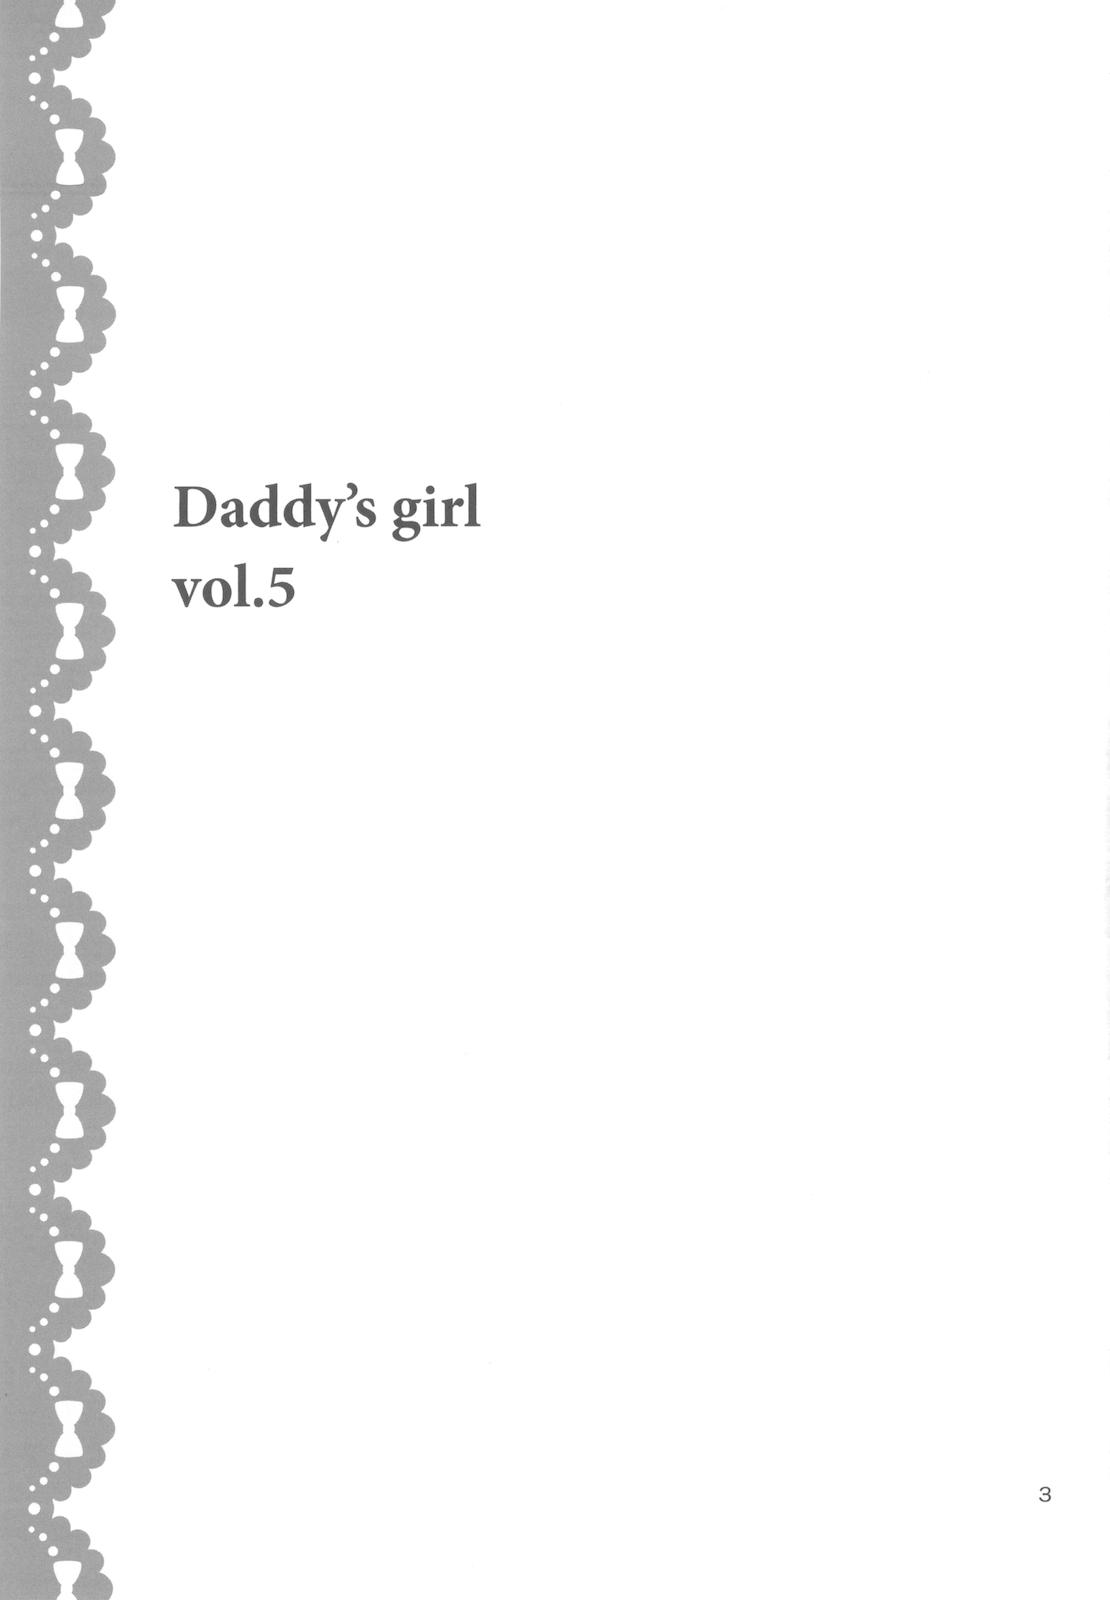 DG - Daddy's girl Vol.5 4